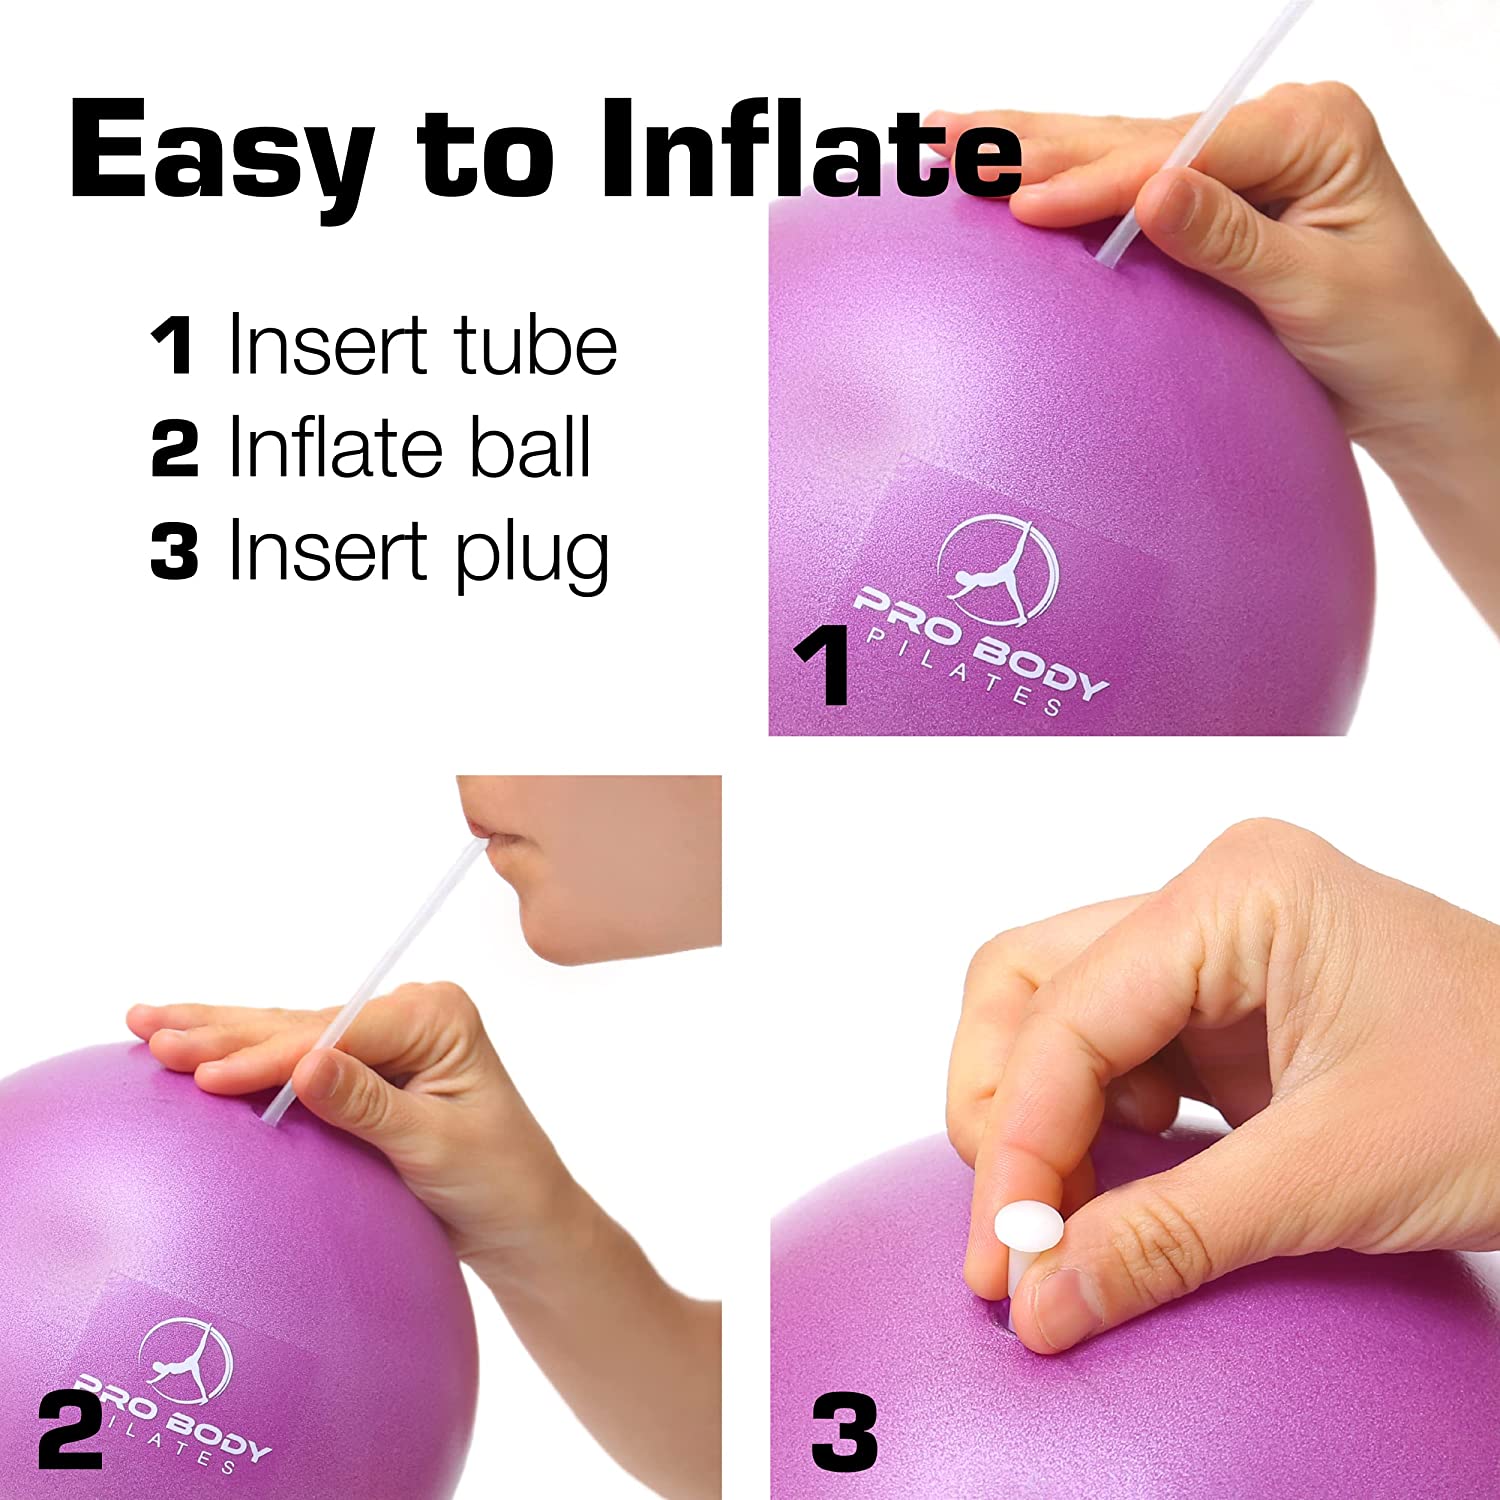 Mini Pilates Yoga Ball 25cm/9 Inch Exercise Ball Anti-Slip Fitness